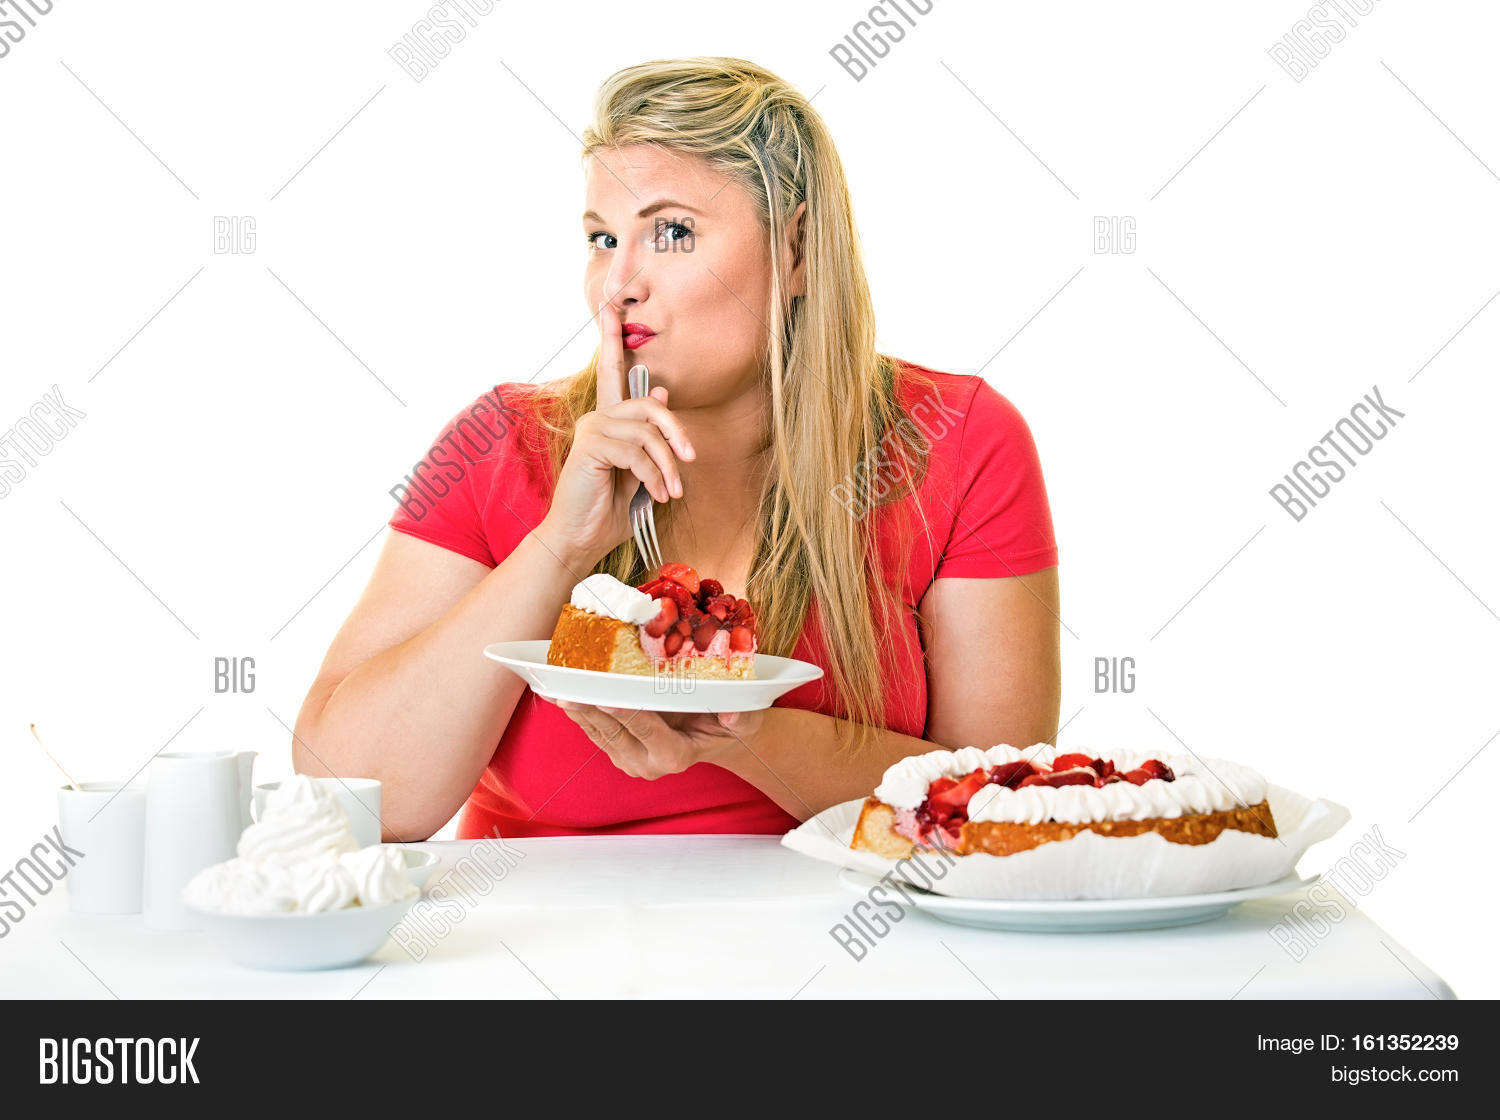 darren mcneely share fat girls eating cake photos